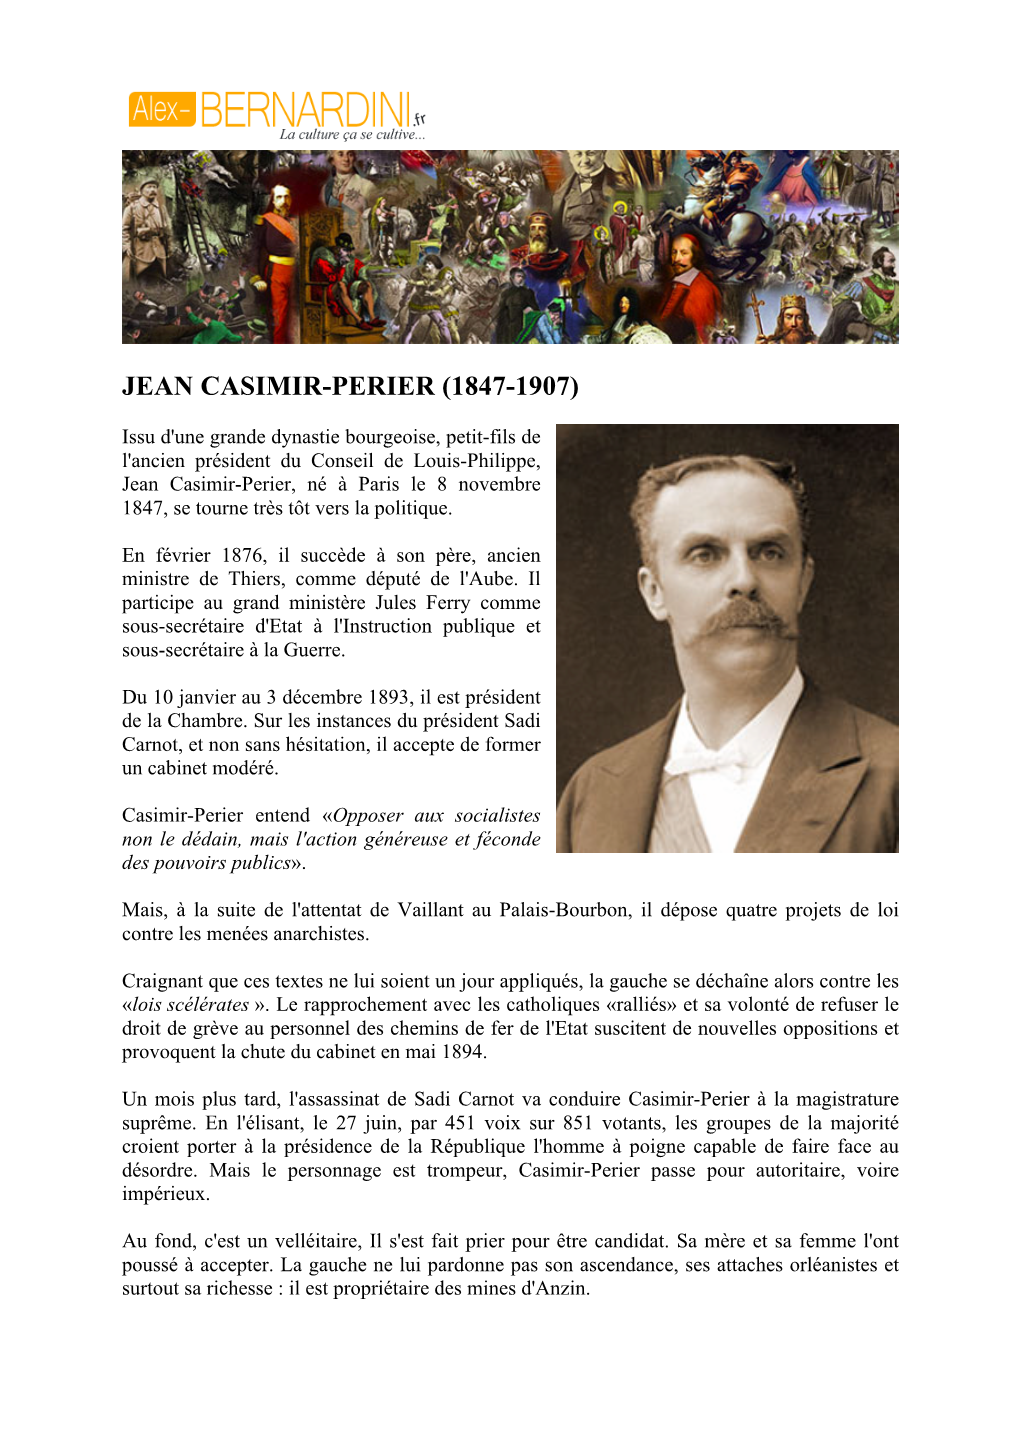 Jean Casimir-Perier (1847-1907)